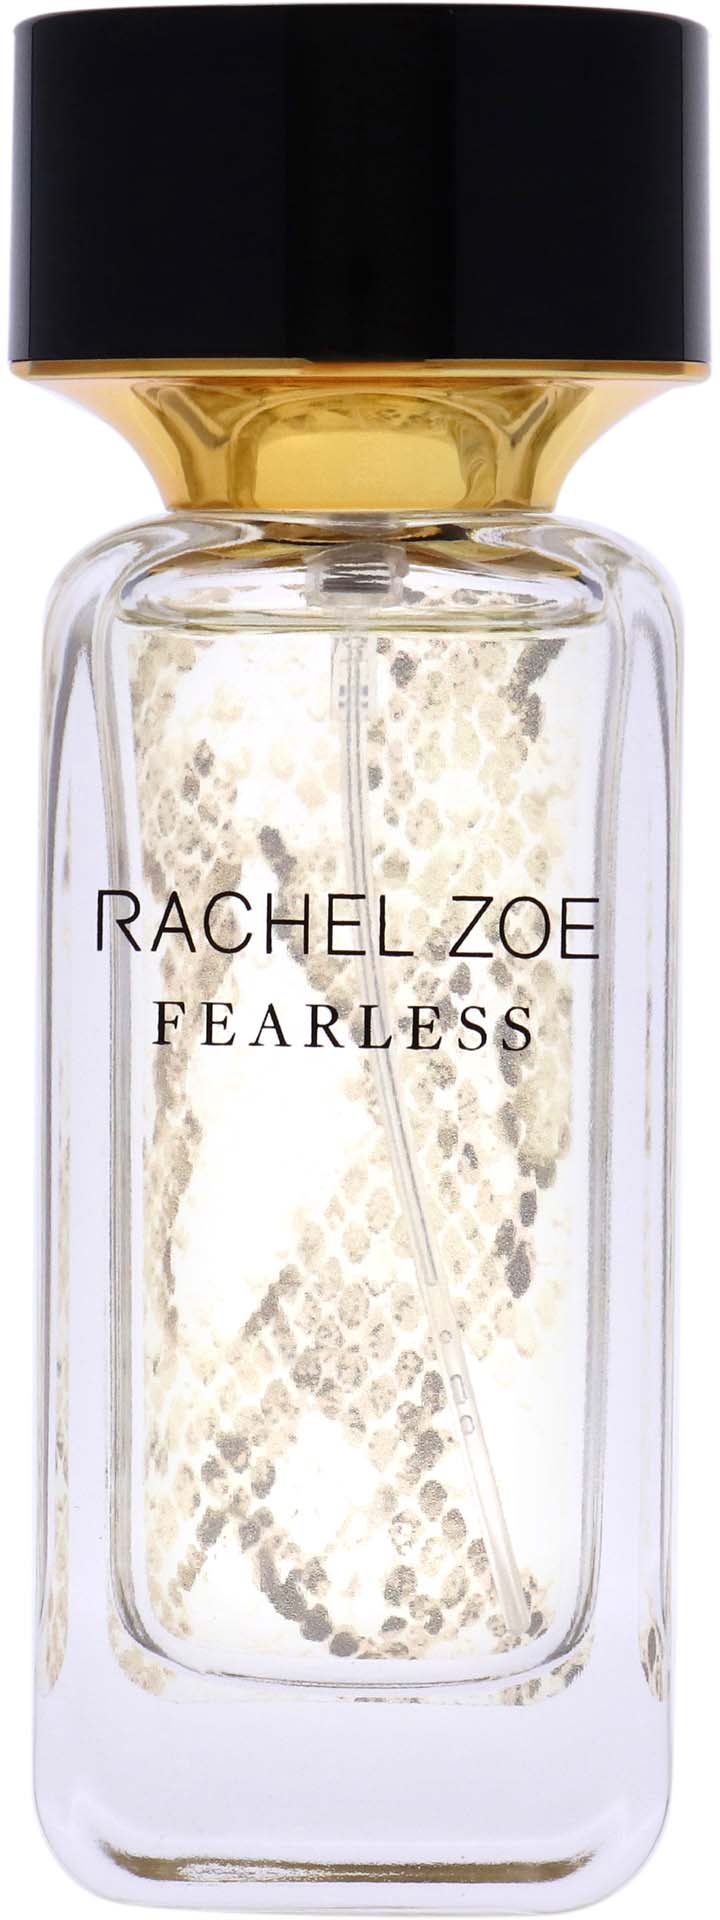 Empowered Rachel Zoe perfume - a fragrance for women 2021